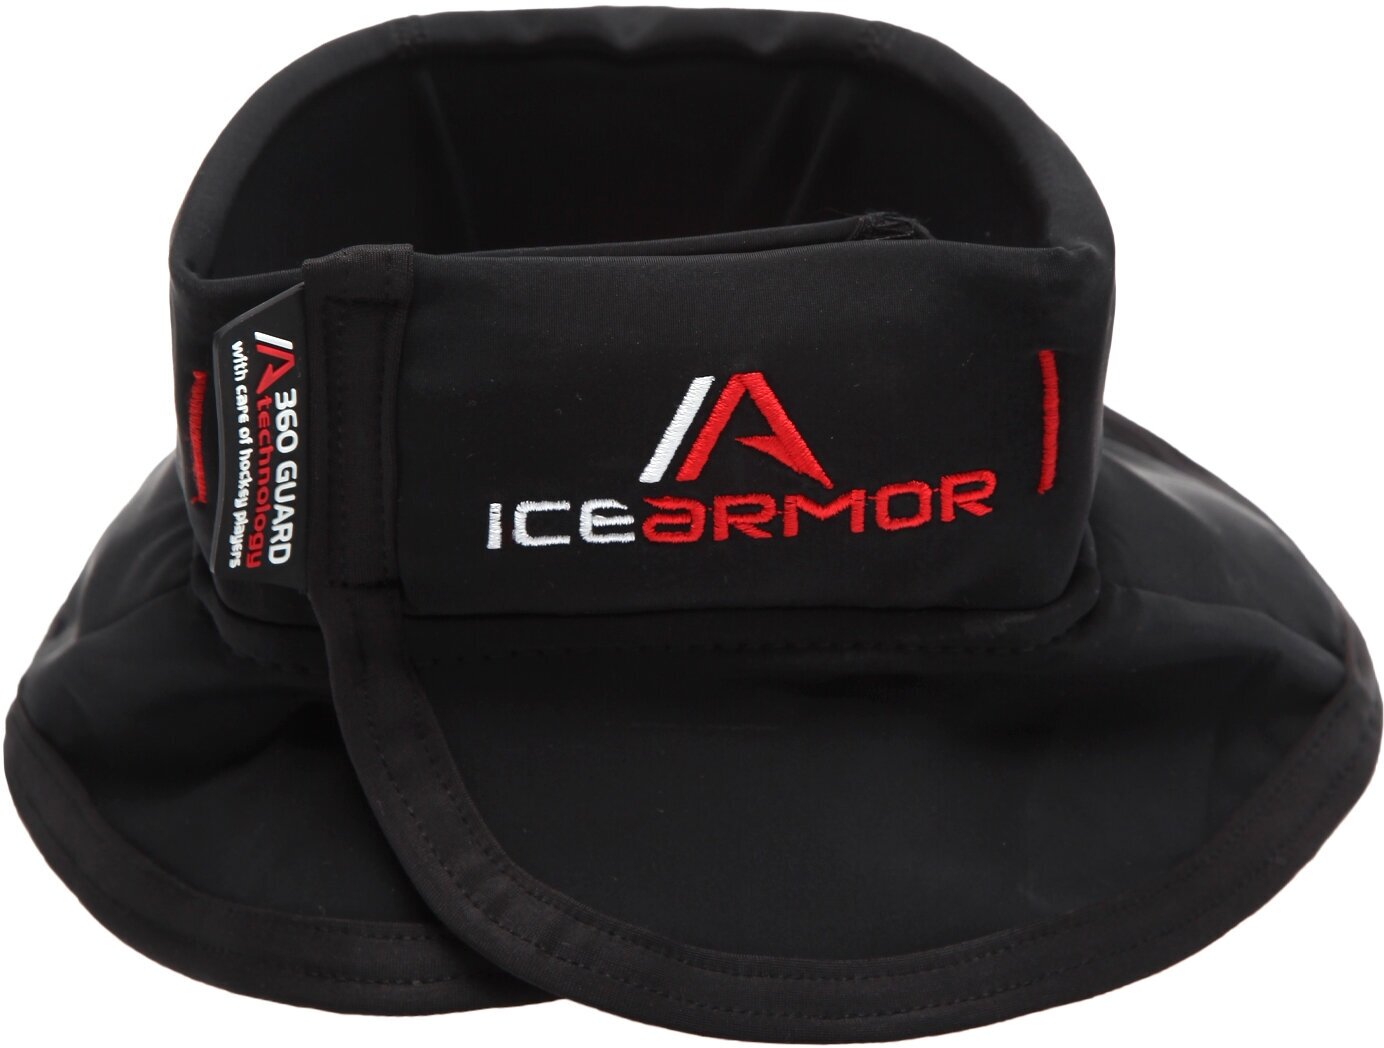 Хоккейная защита шеи и ключицы ICE ARMOR р. S (28-31 см)